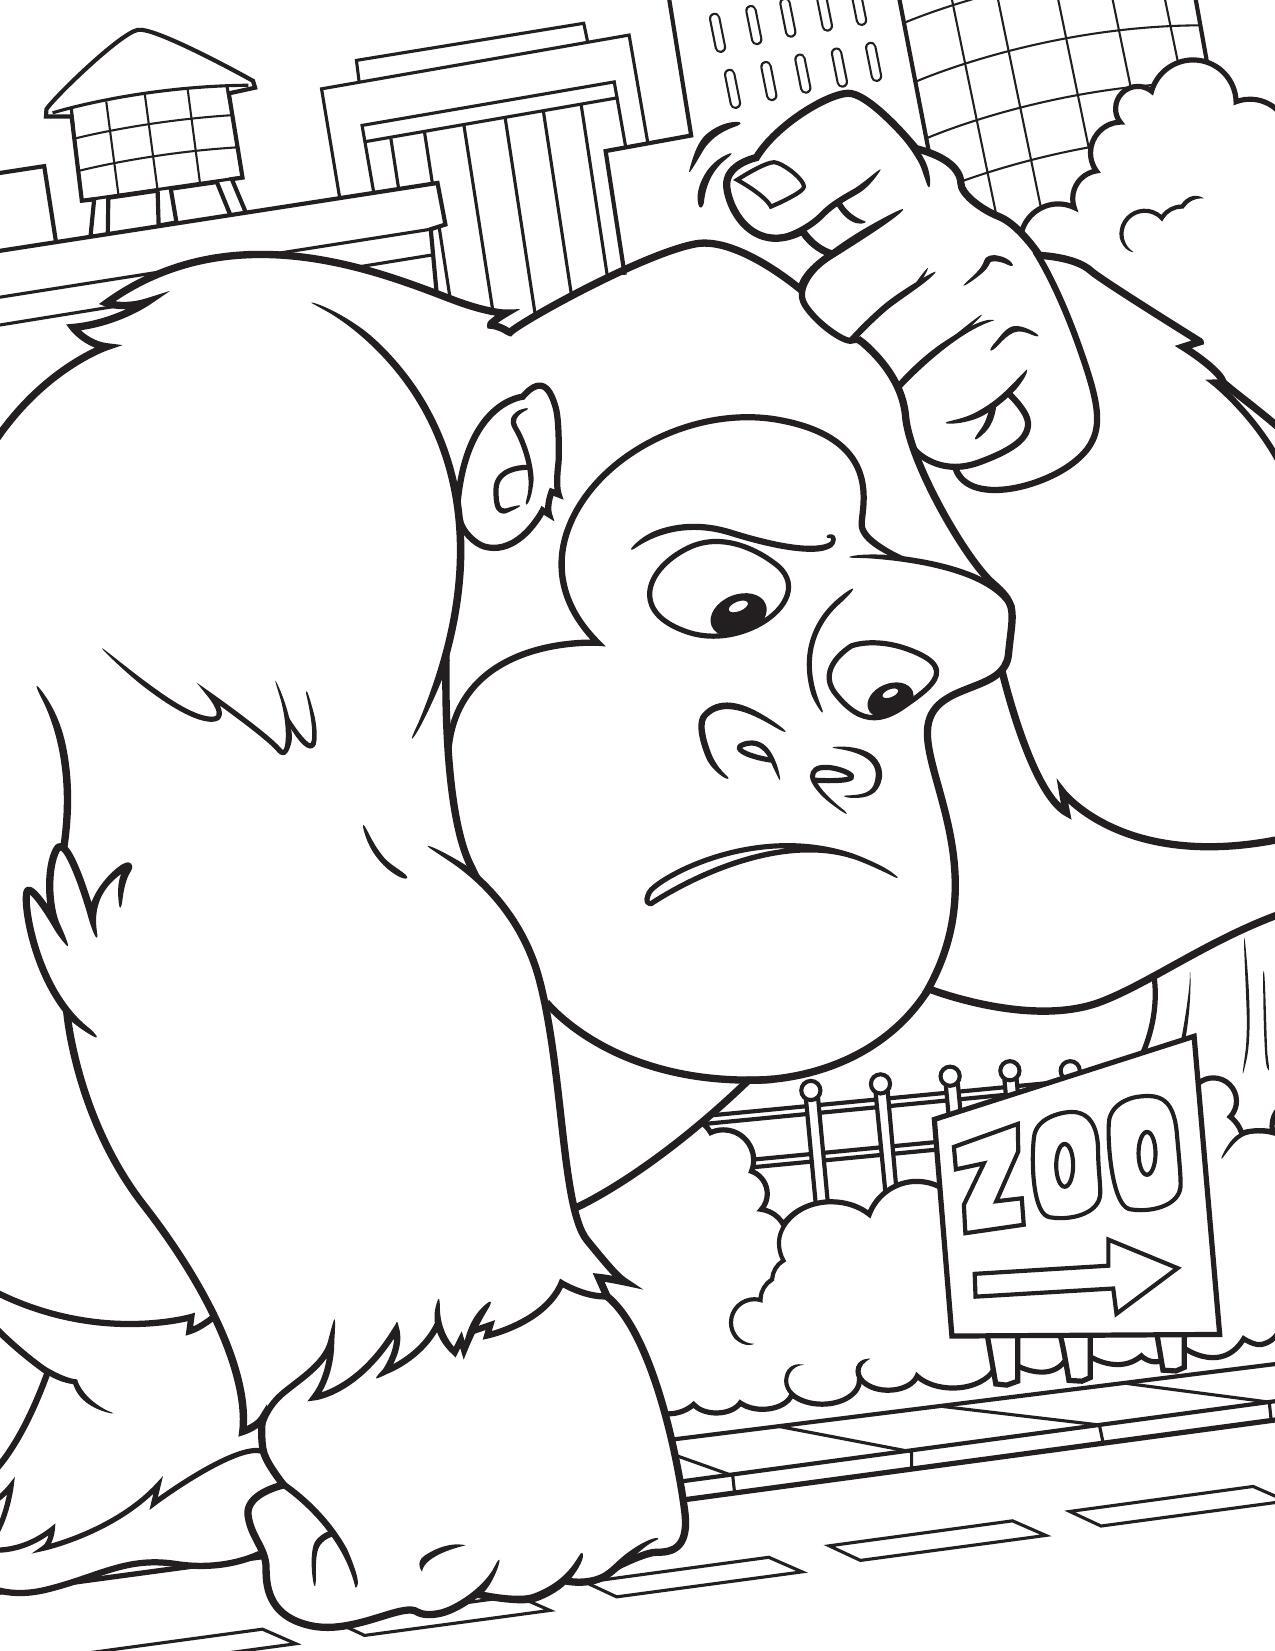 Giant Gorilla Sketch